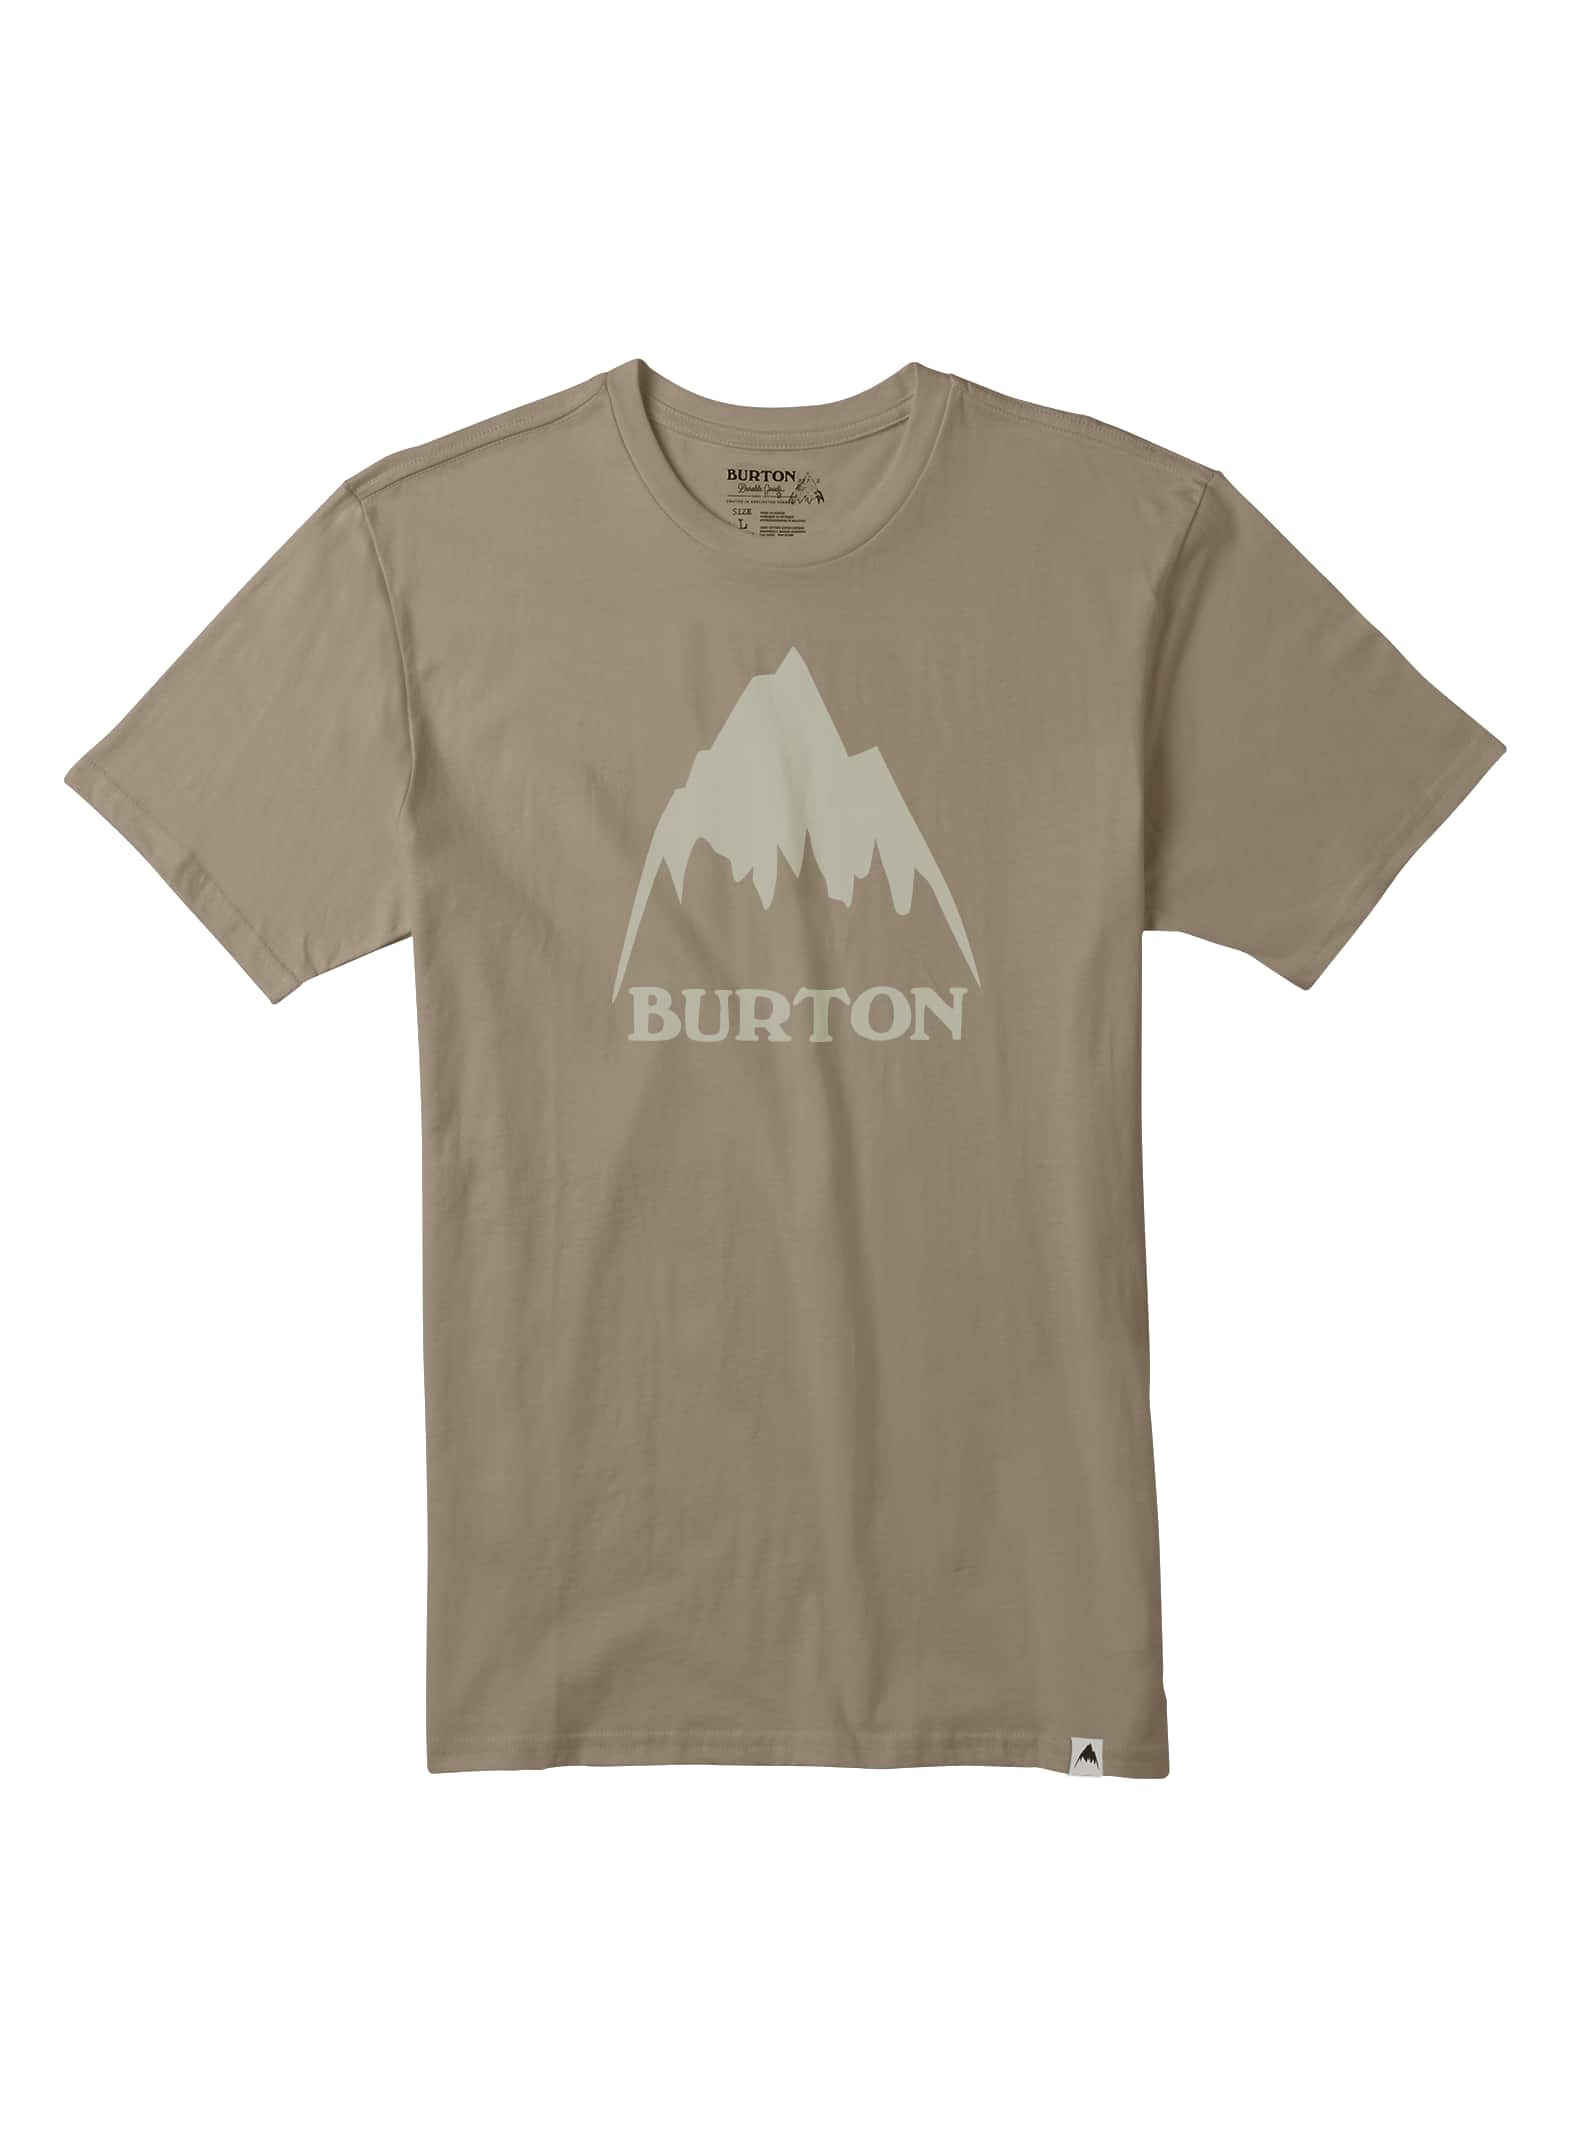 Burton Classic Mountain High Short Sleeve T Shirt | Burton.com Fall 2019 US